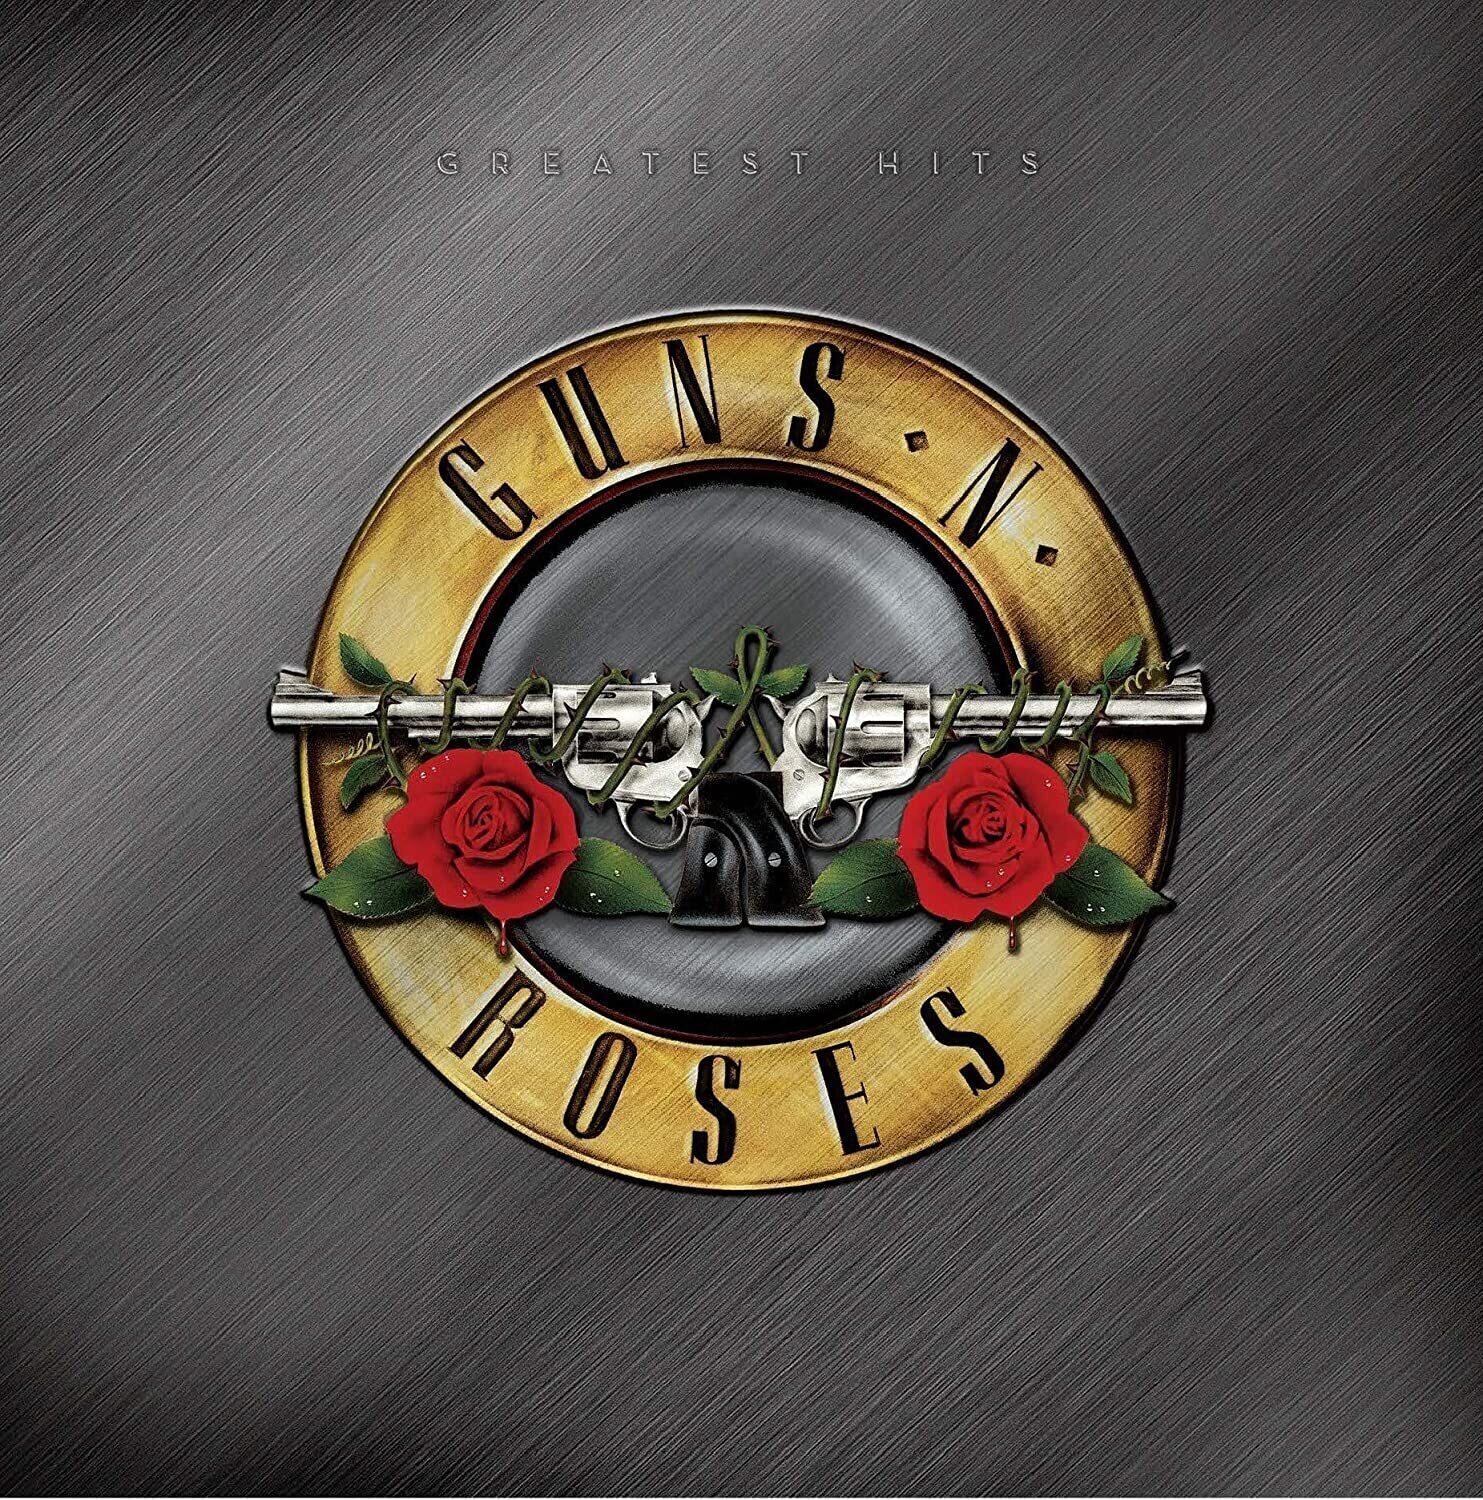 LP Guns N' Roses - Greatest Hits (2 LP) (180g)